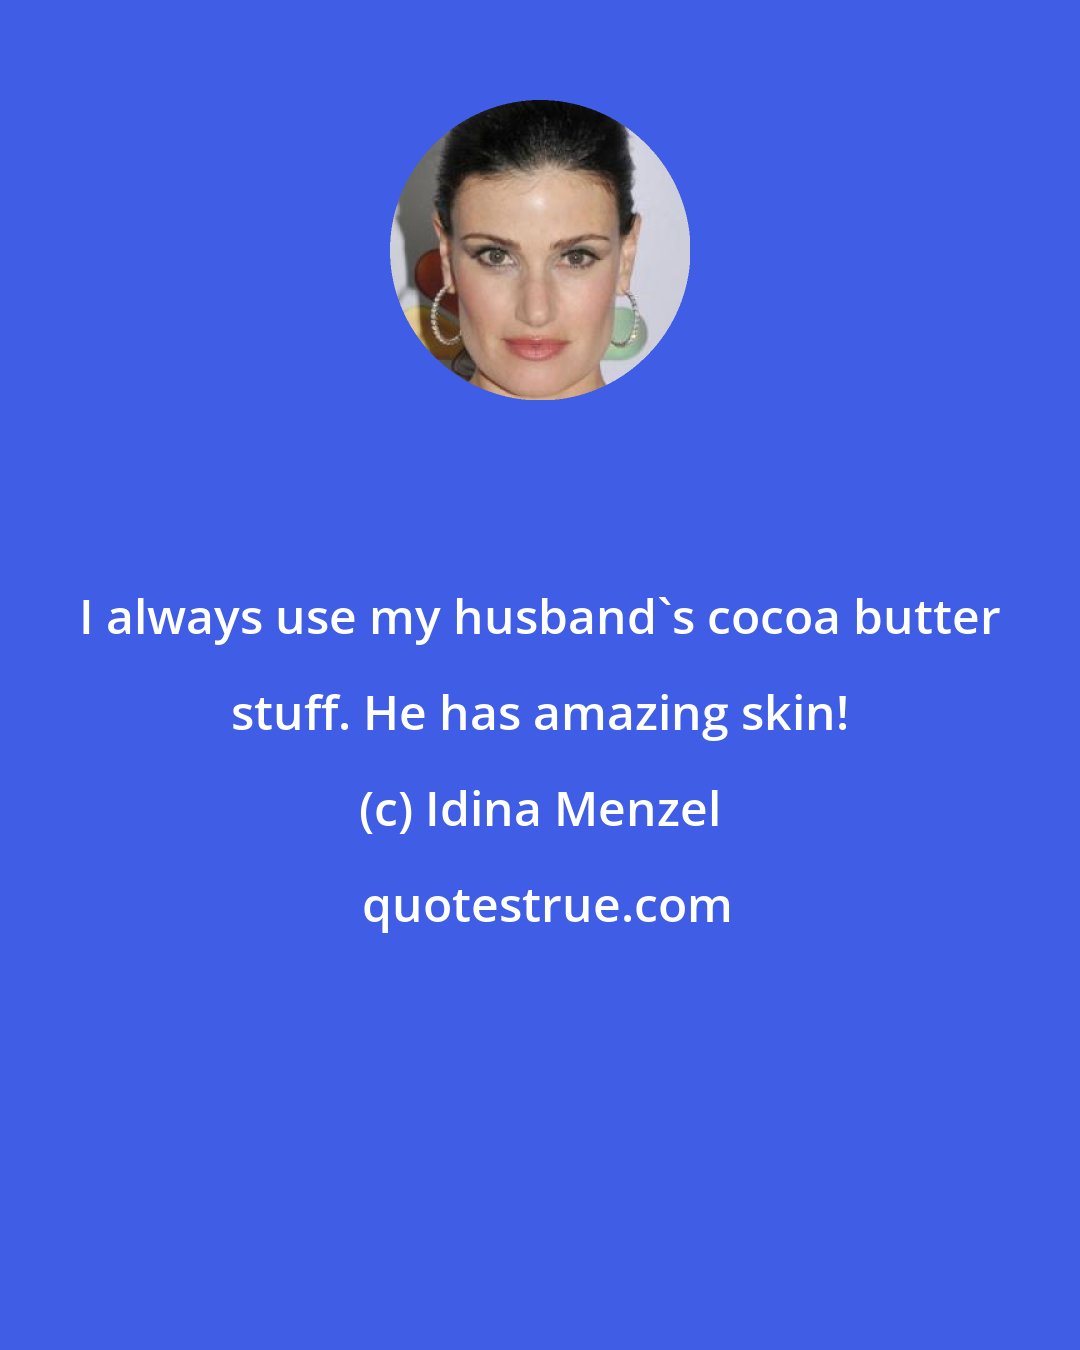 Idina Menzel: I always use my husband's cocoa butter stuff. He has amazing skin!